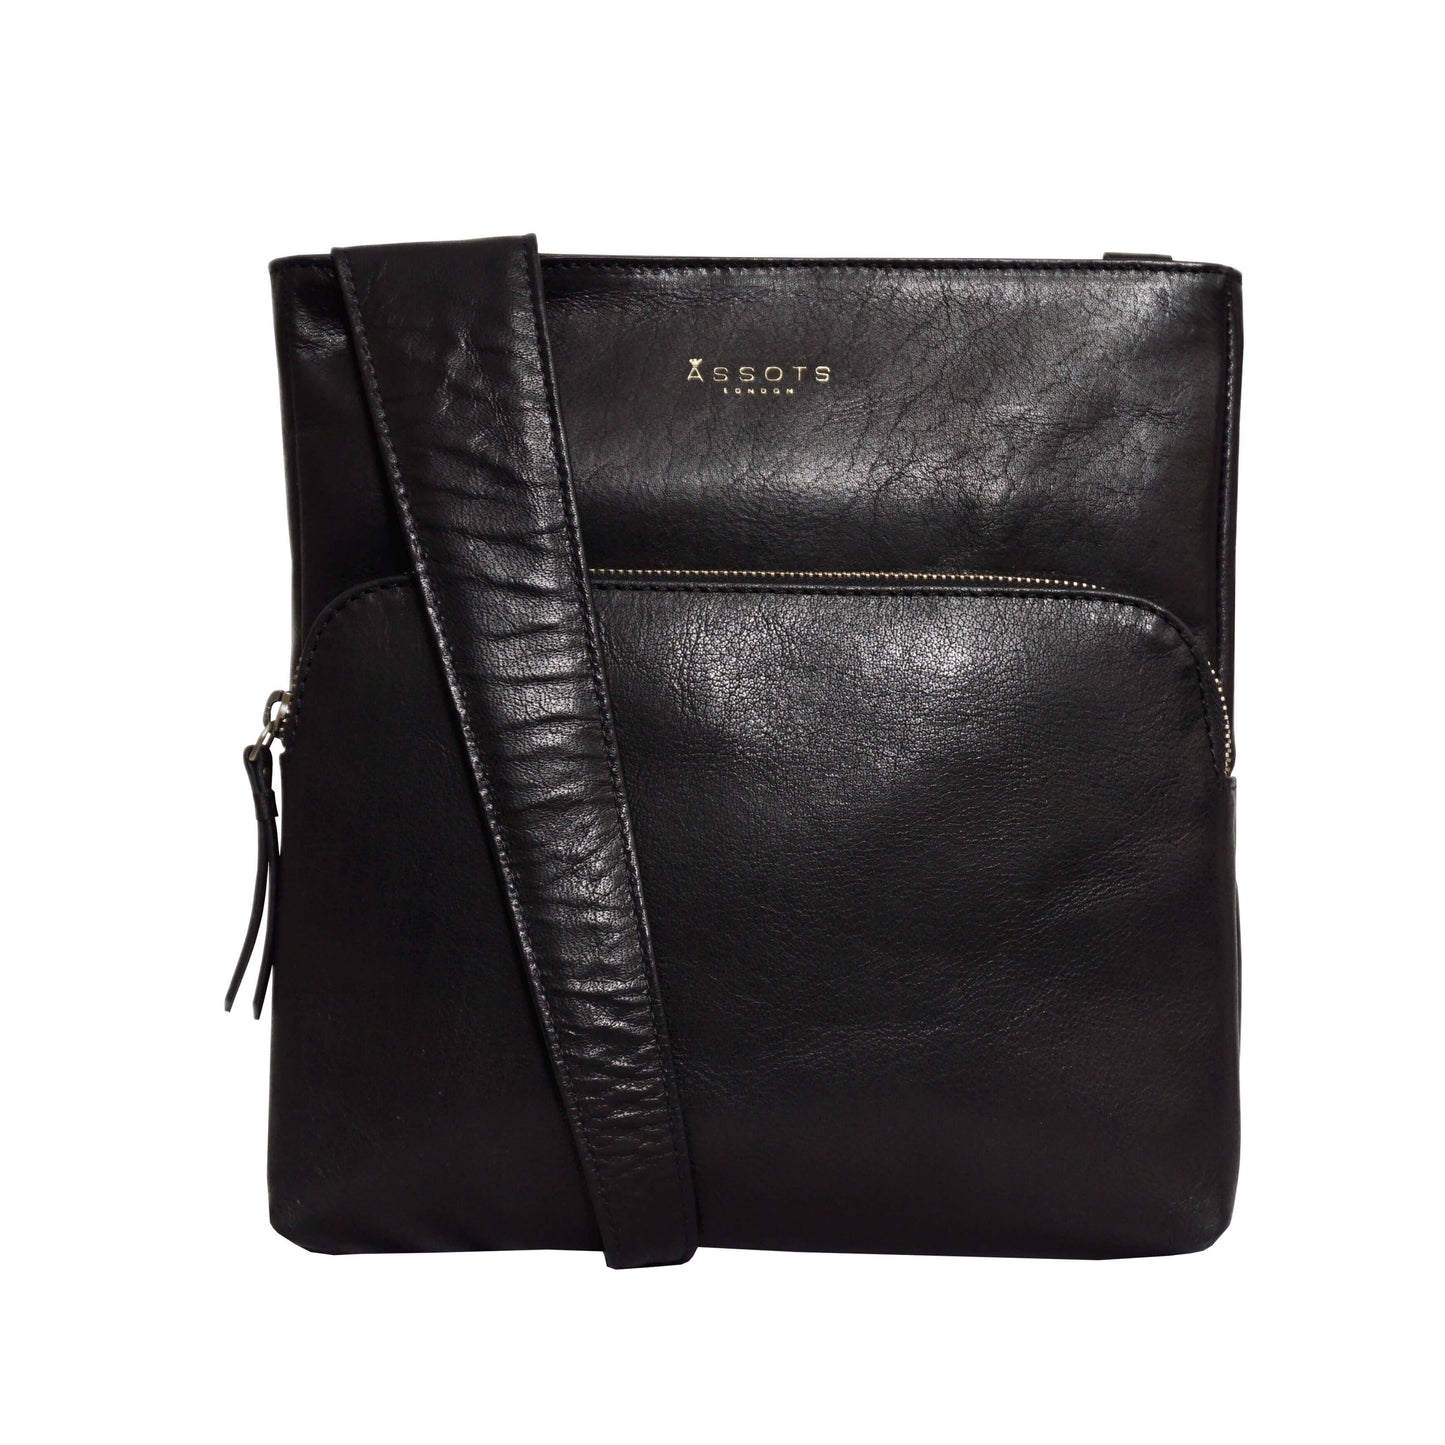 'CANARY' Black Vintage Leather Crossbody bag